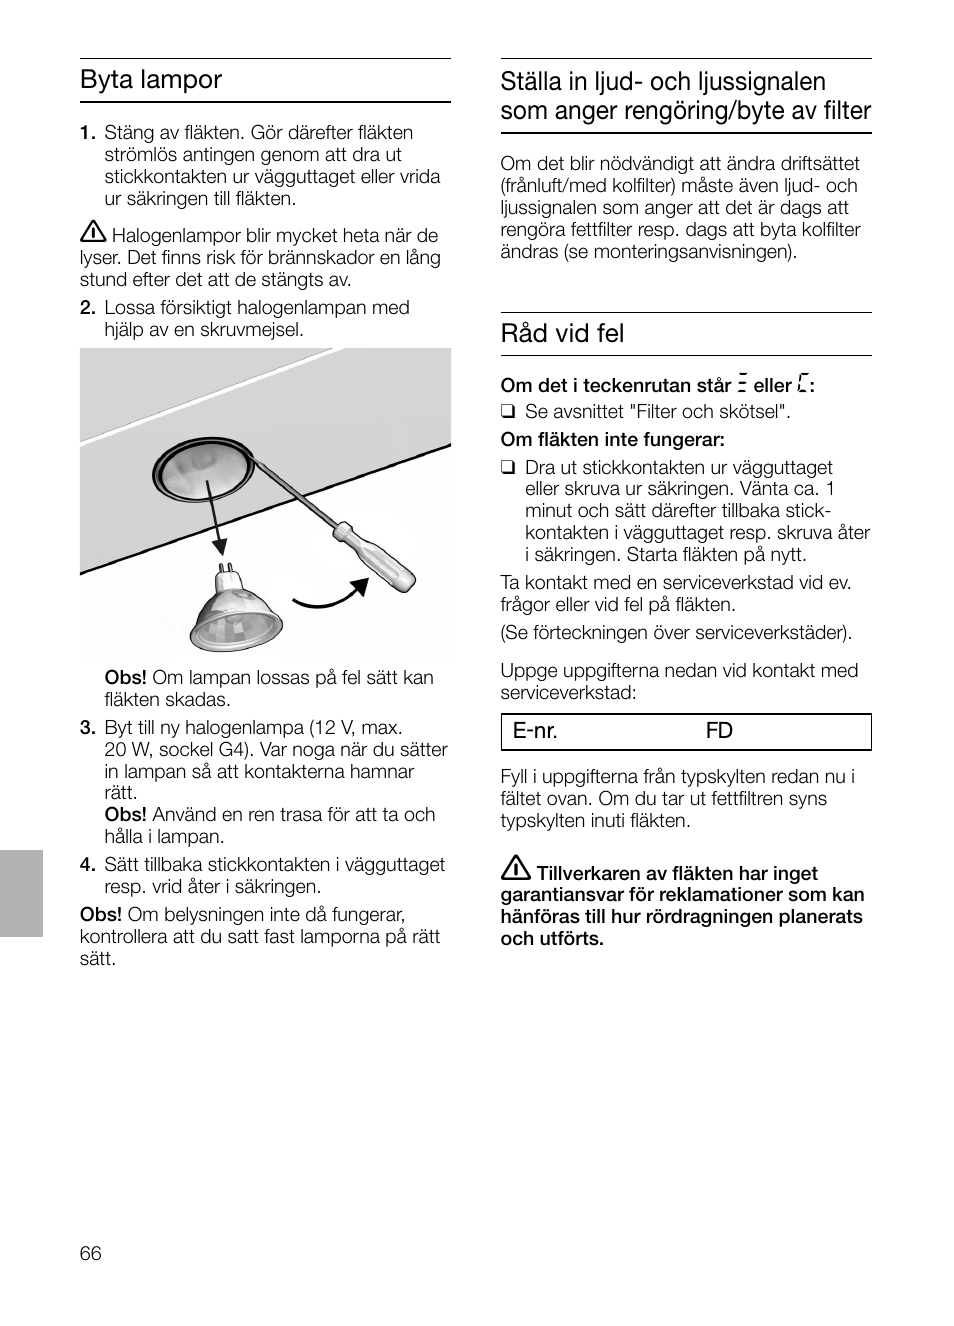 Byta lampor råd vid fel | Siemens LF457CA60 User Manual | Page 66 / 108